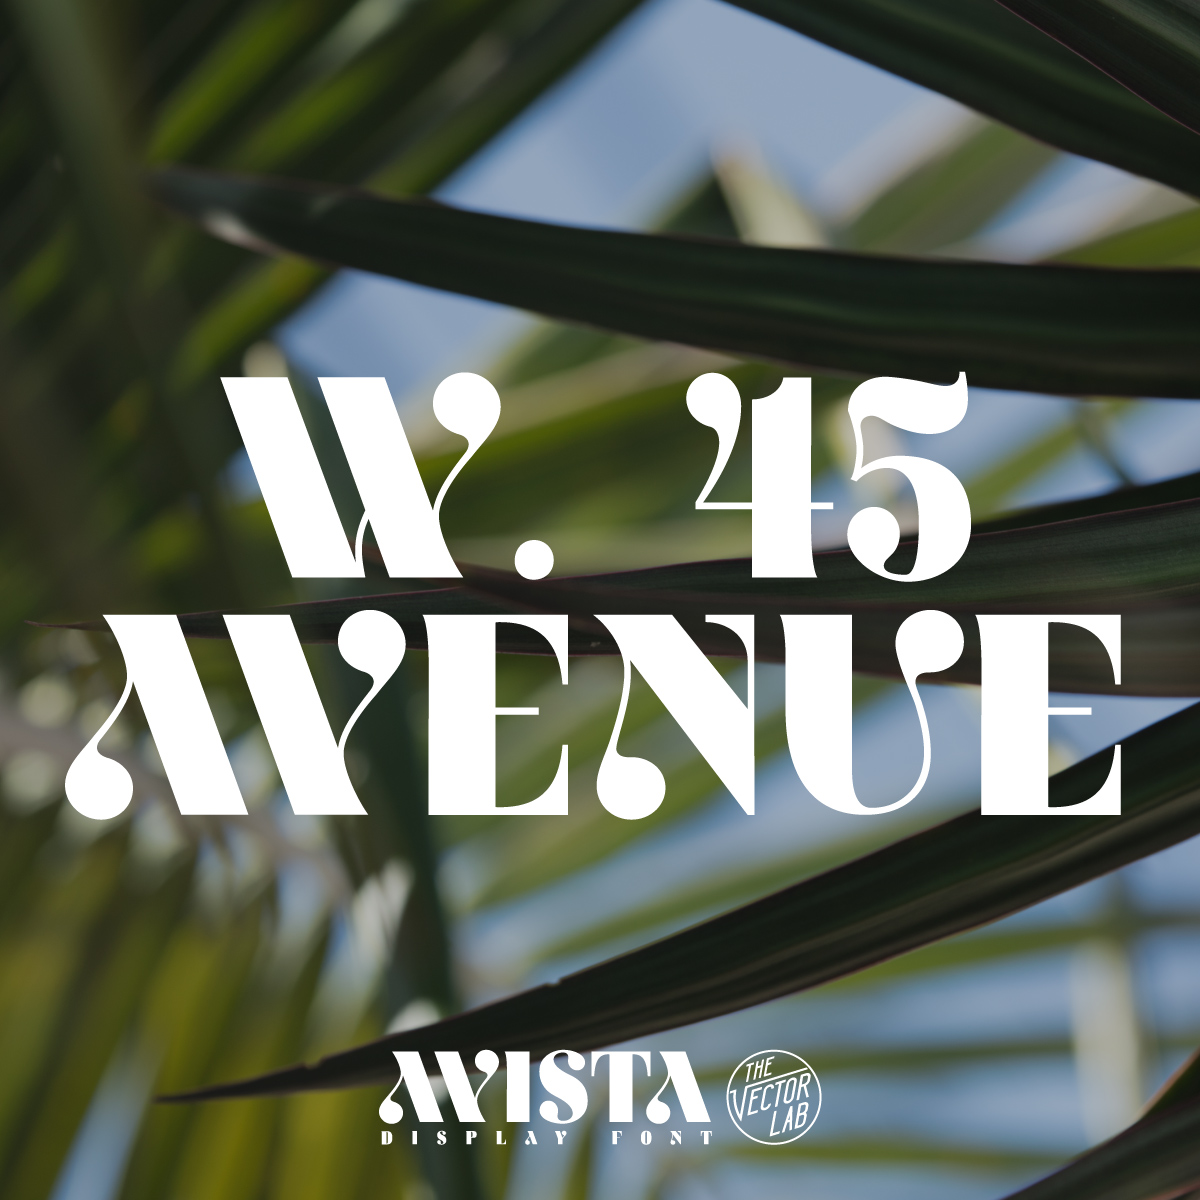 W. 45 Avenue - AVISTA font by Ray Dombroski & TheVectorLab